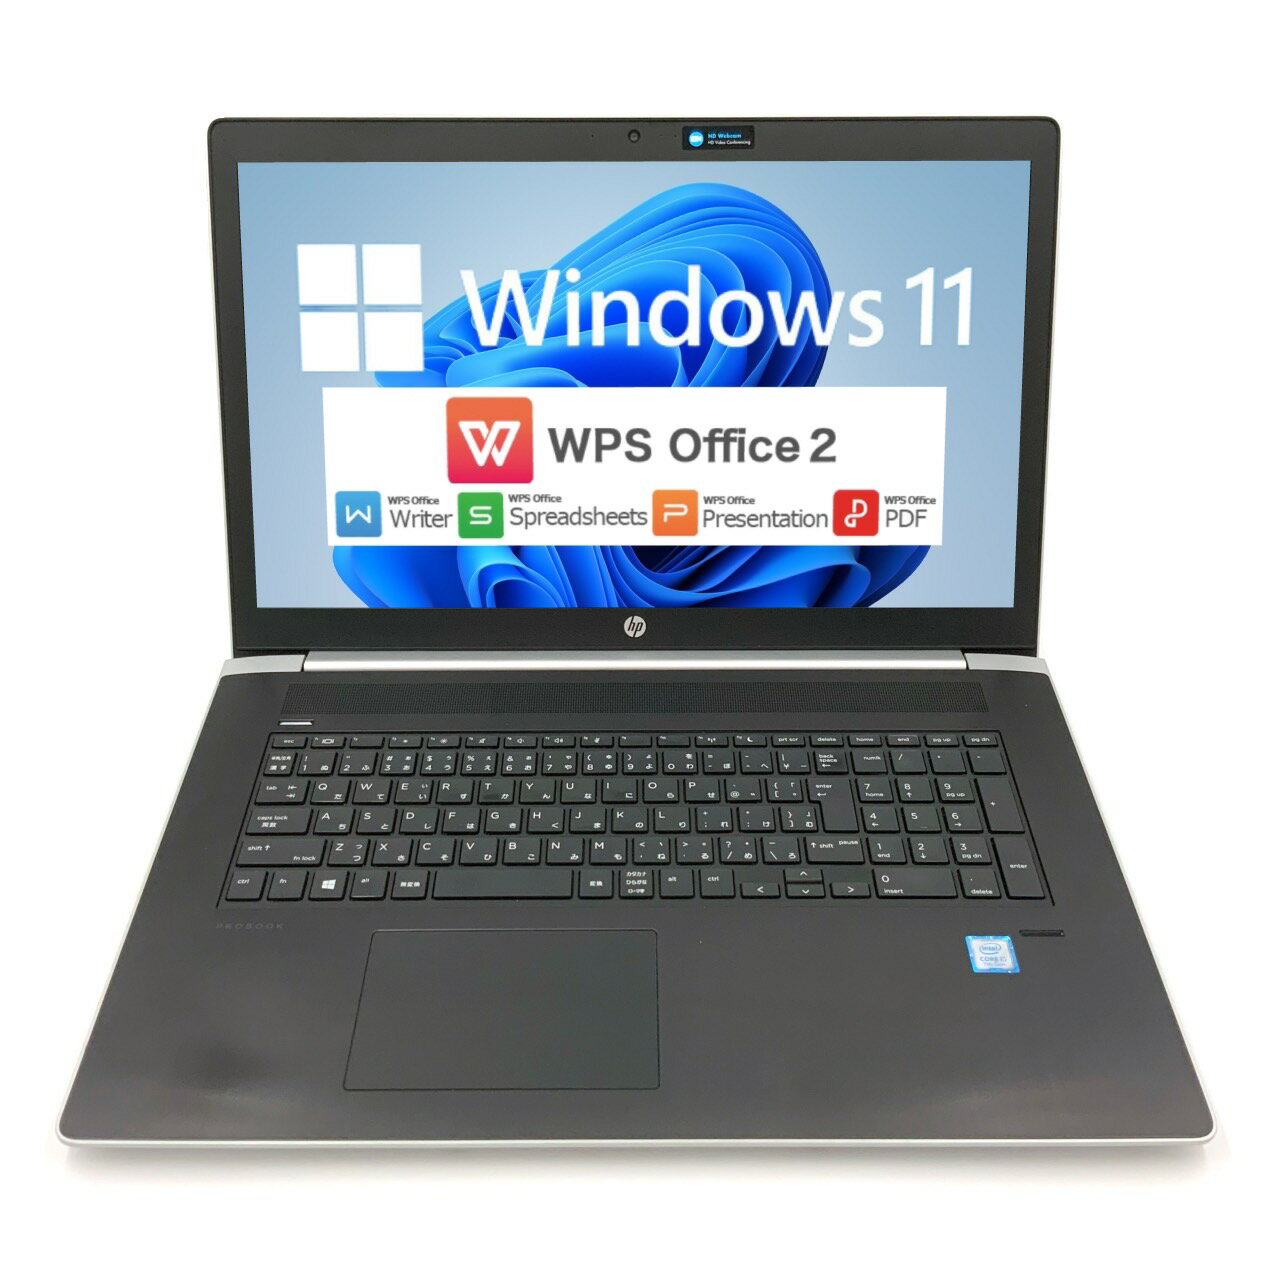 【Windows11】 【大画面17.3インチ】 【高解像度液晶】 HP ProBook 470 G5 第8世代 Core i5 8250U 4GB 新品SSD120GB 64bit WPSOffice 17.3インチ HD+ カメラ テンキー 無線LAN 中古パソコン ノートパソコン PC Notebook 【中古】